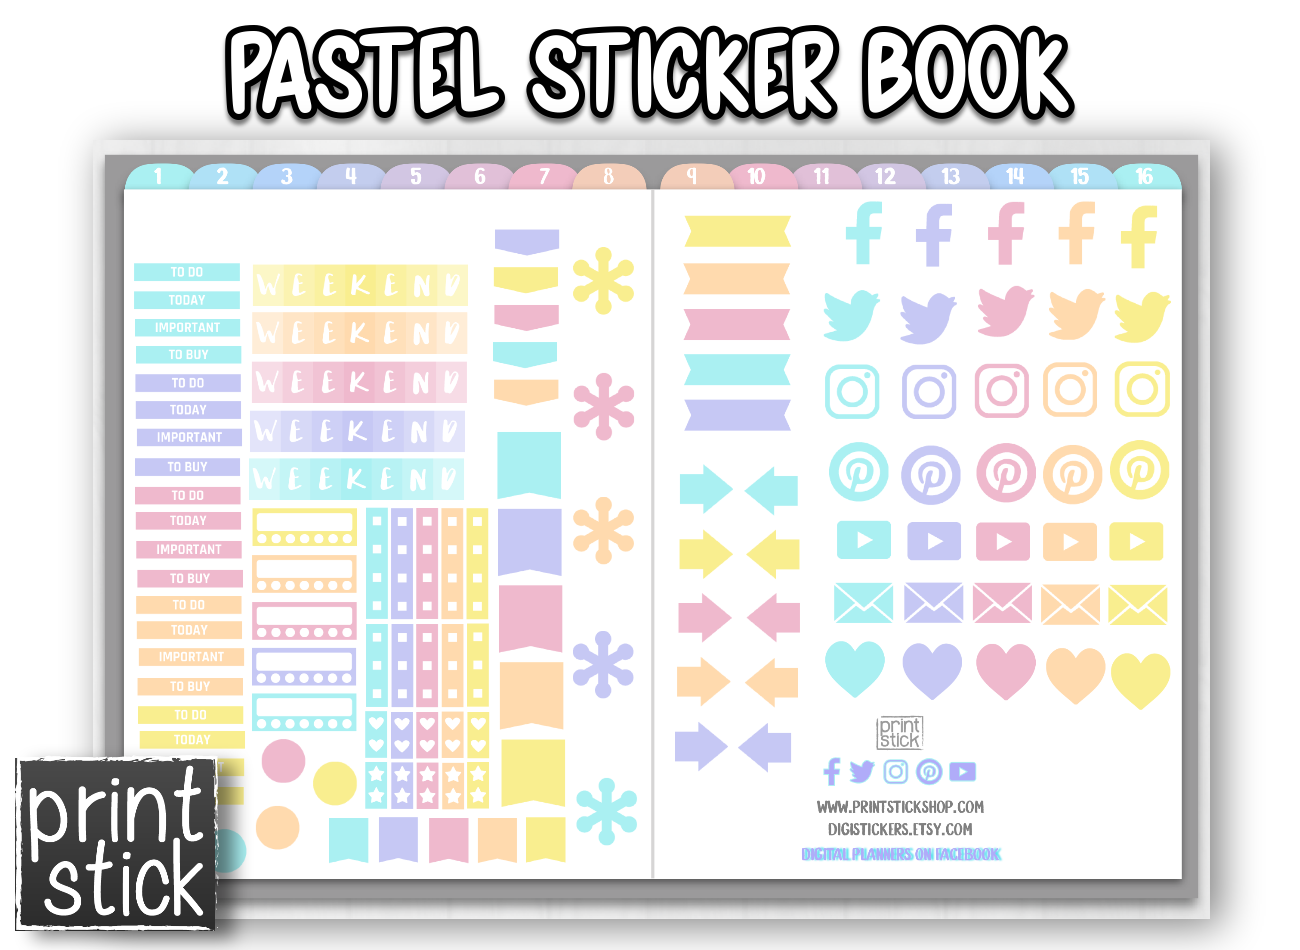 Bo - Mini Sticker Book #1 - Choose one - Print Stick